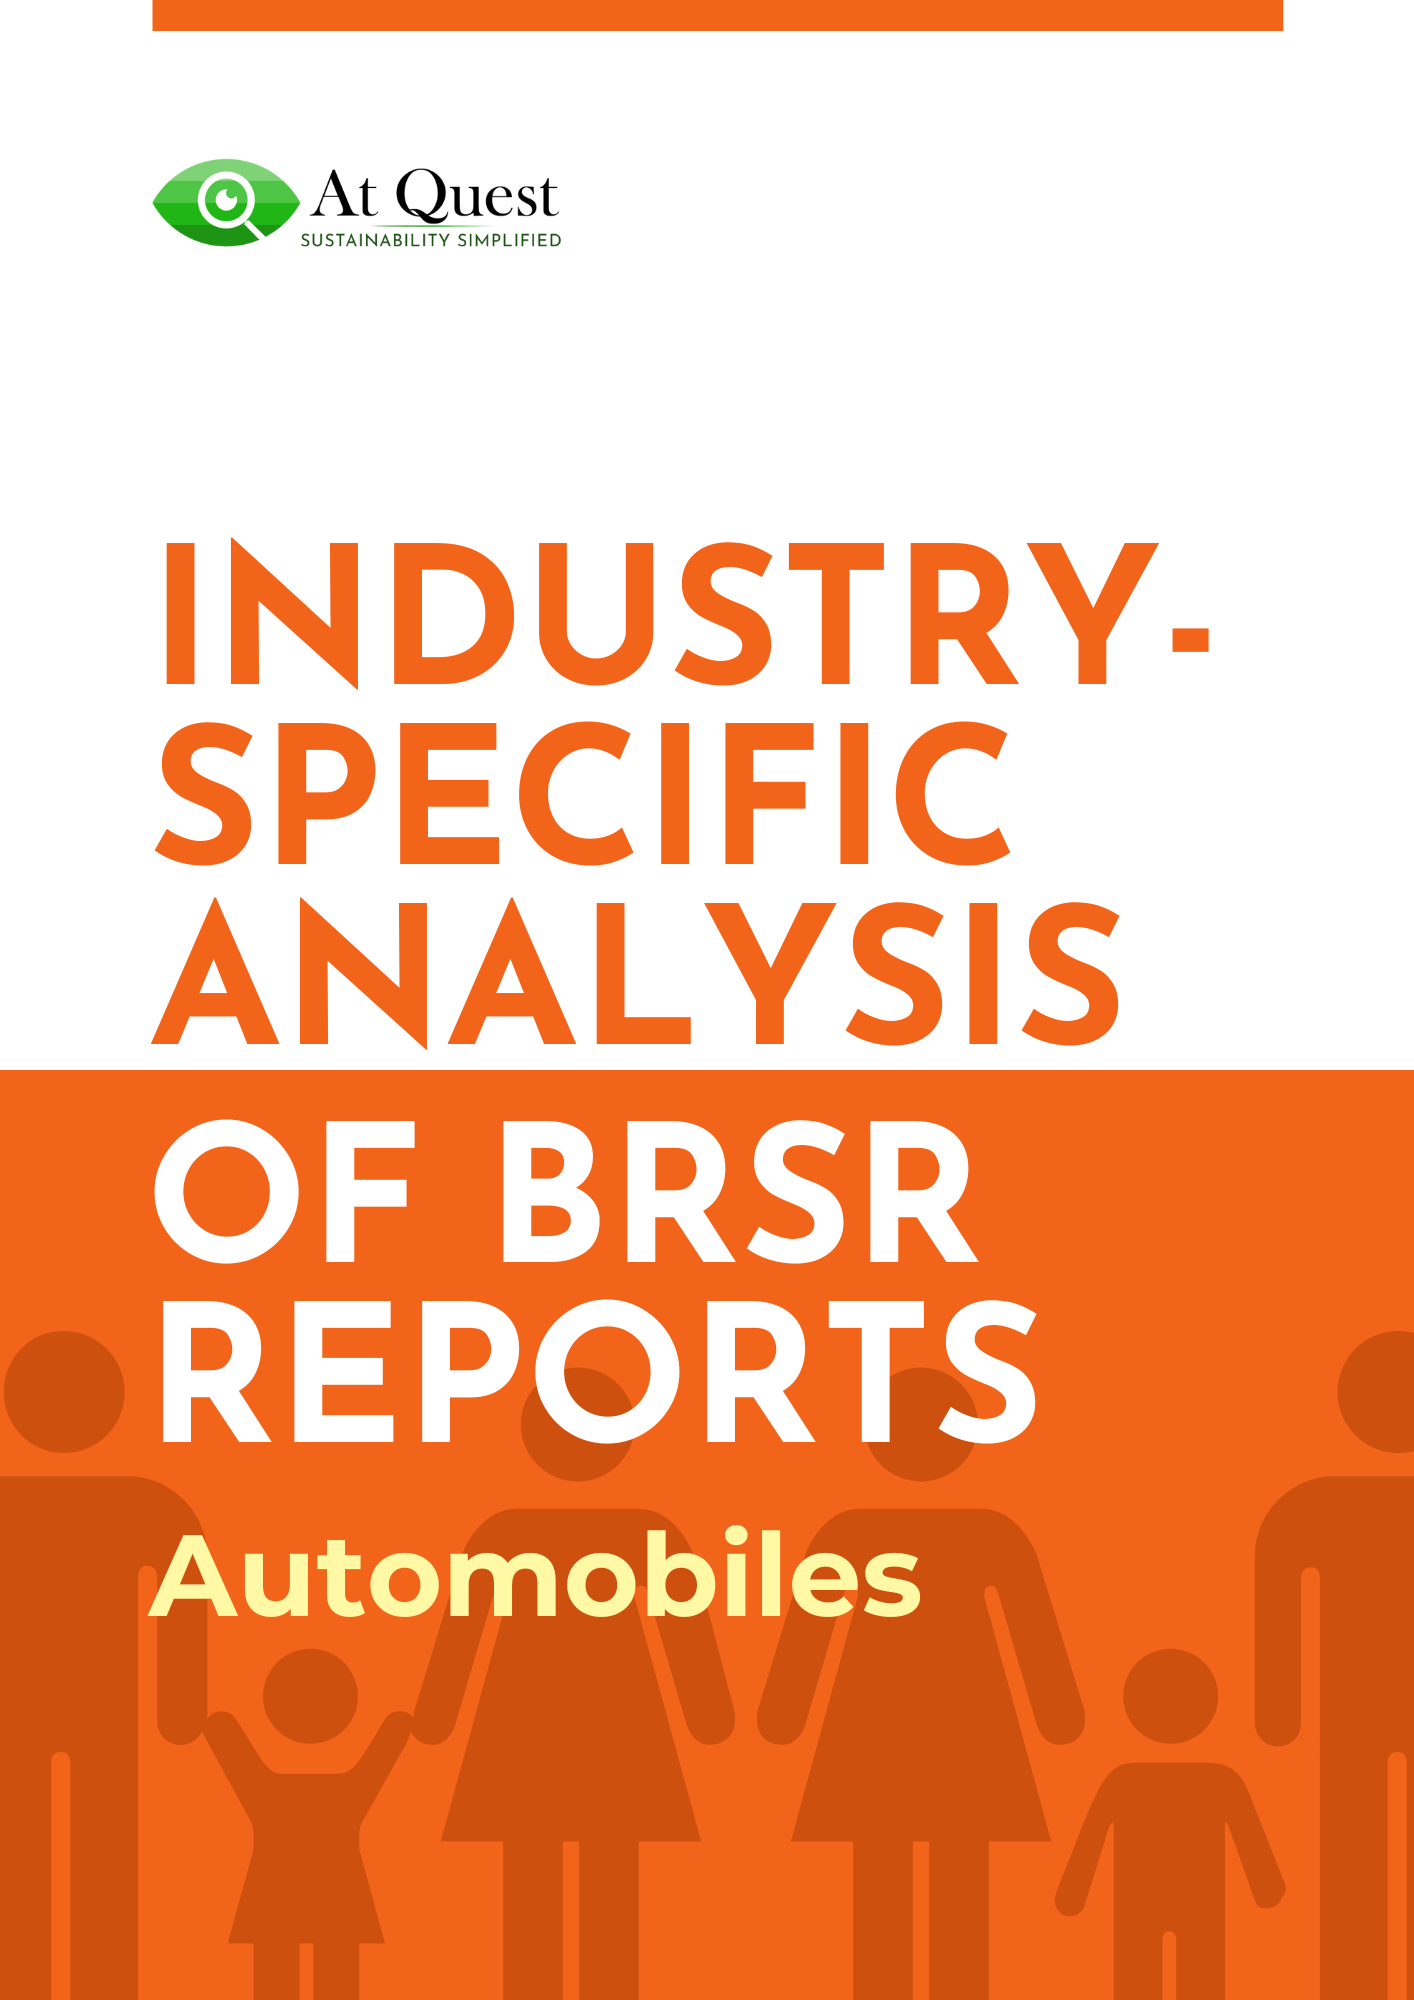 BRSR Report Analysis sample